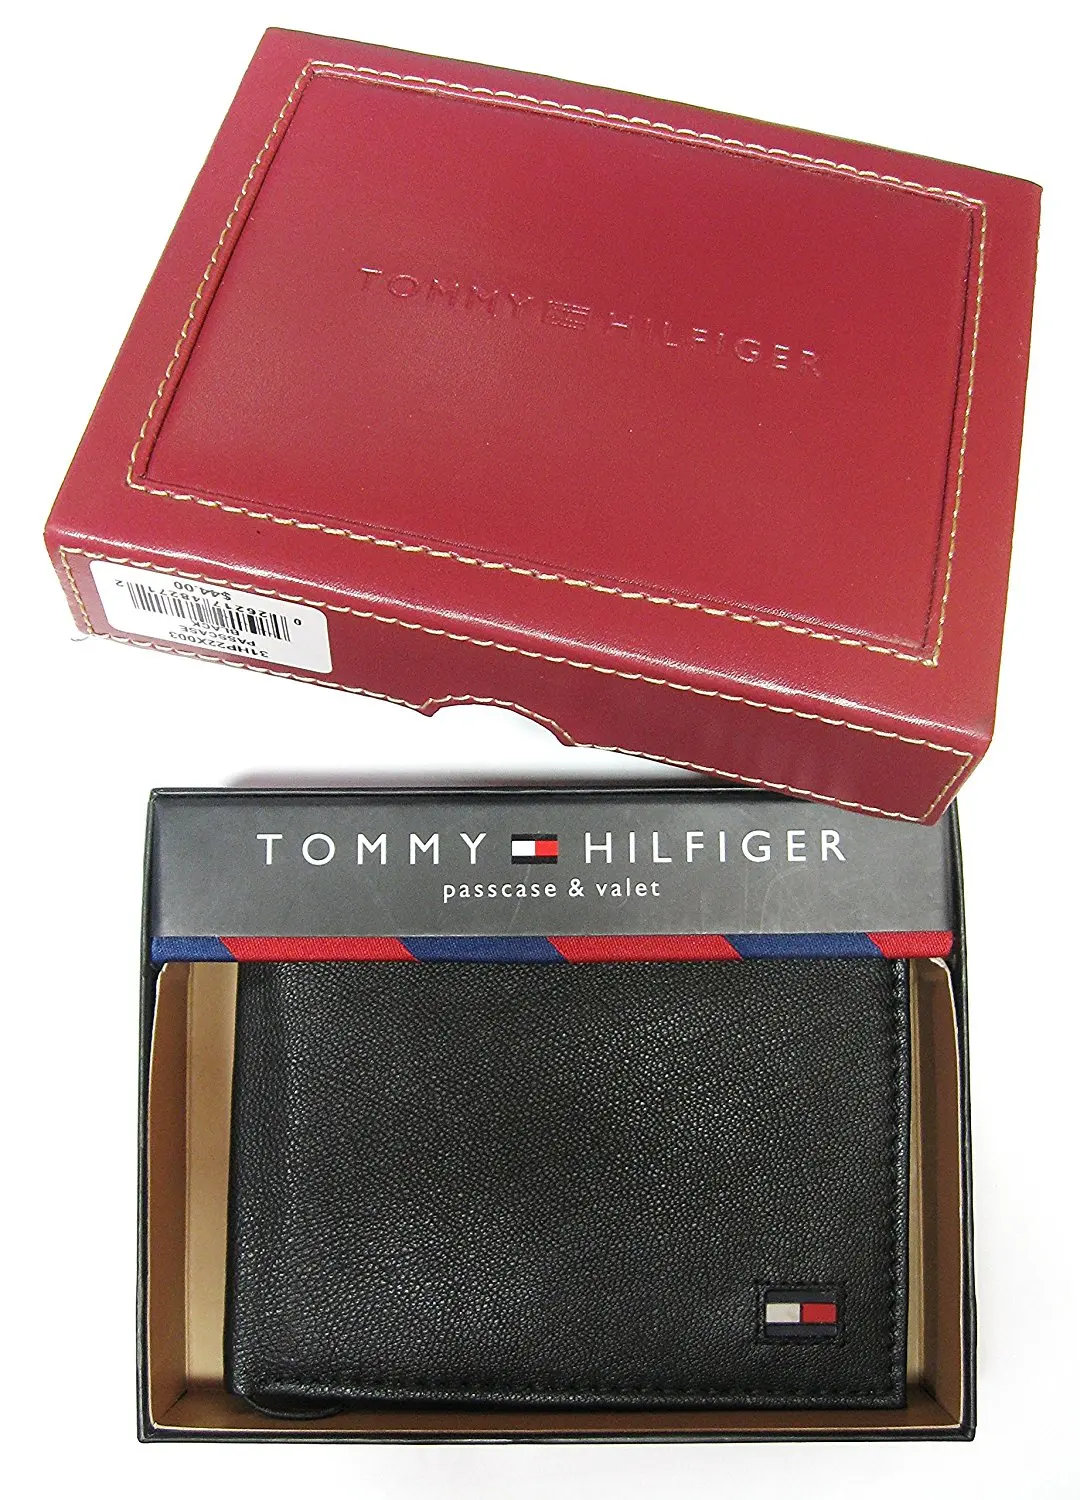 tommy hilfiger wallet passcase & valet